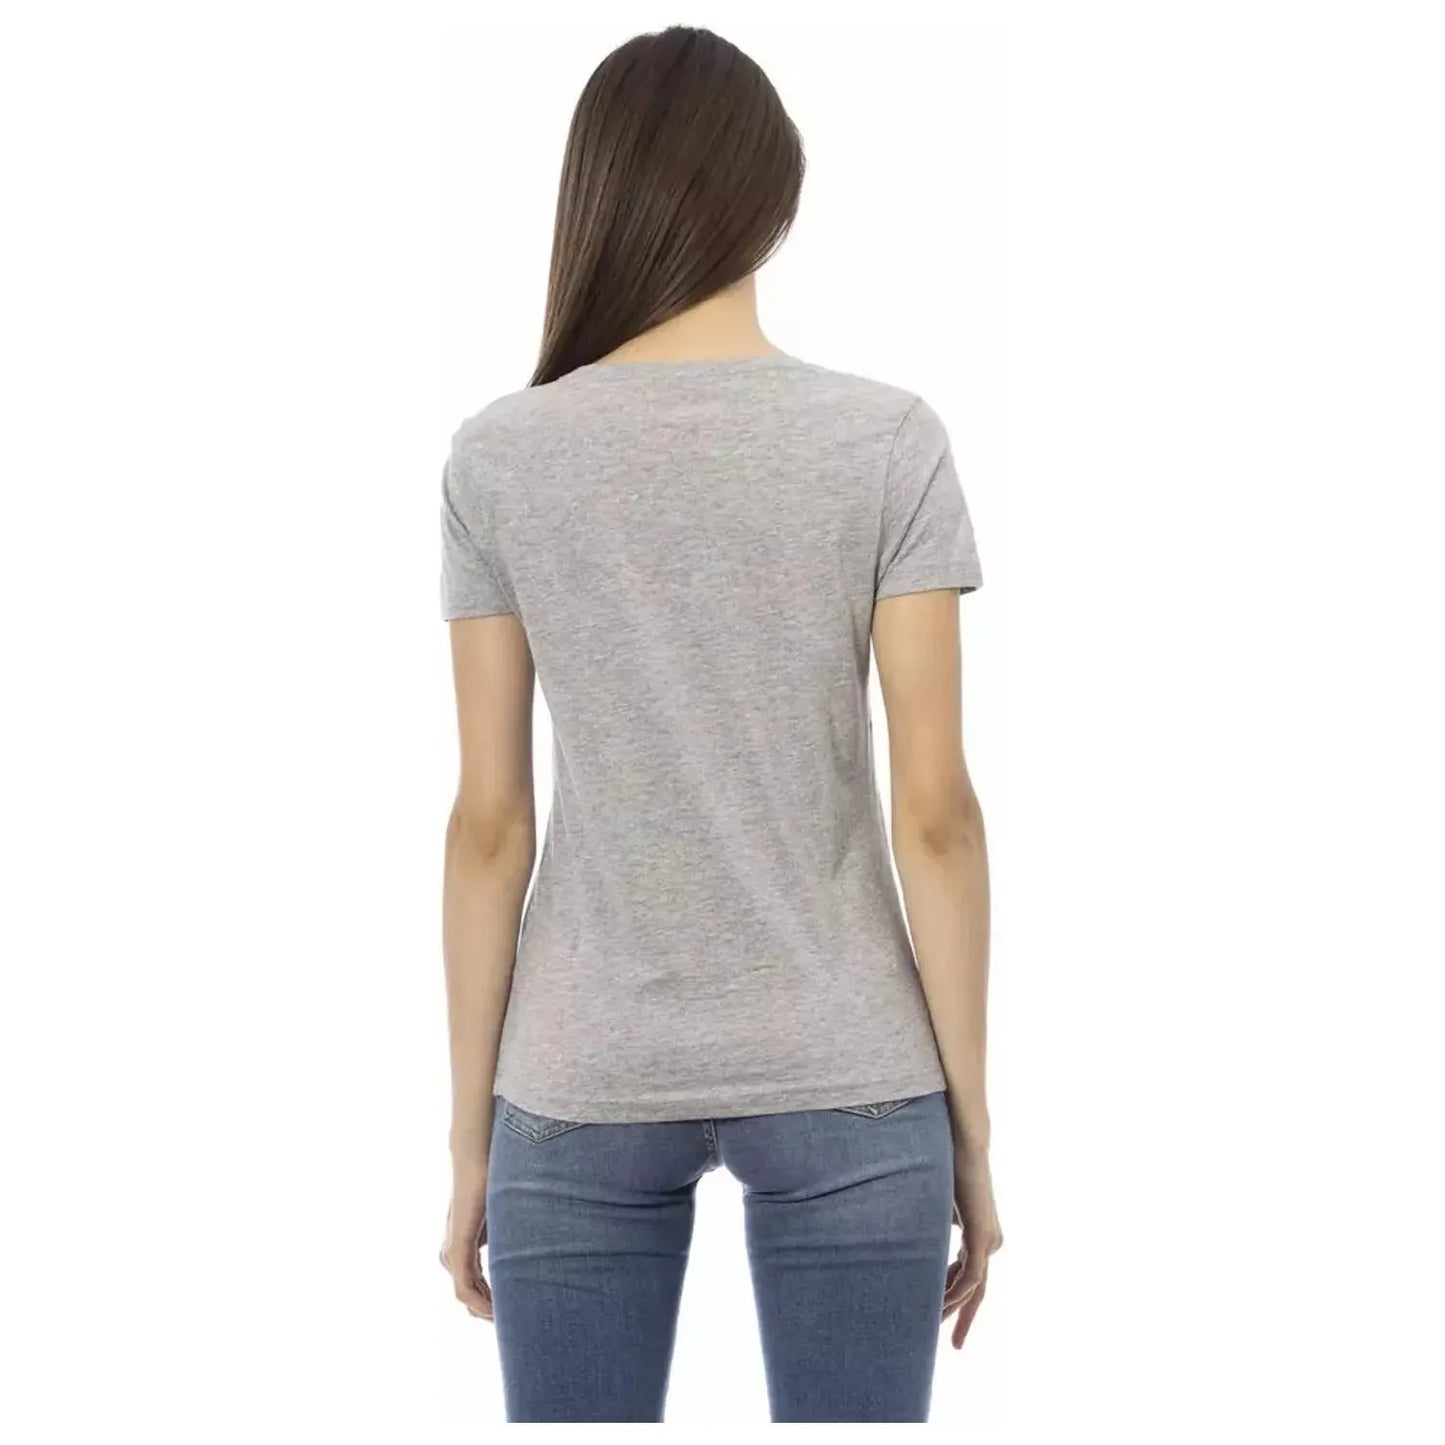 Trussardi Action Chic Gray Short Sleeve Round Neck Tee gray-cotton-tops-t-shirt-21